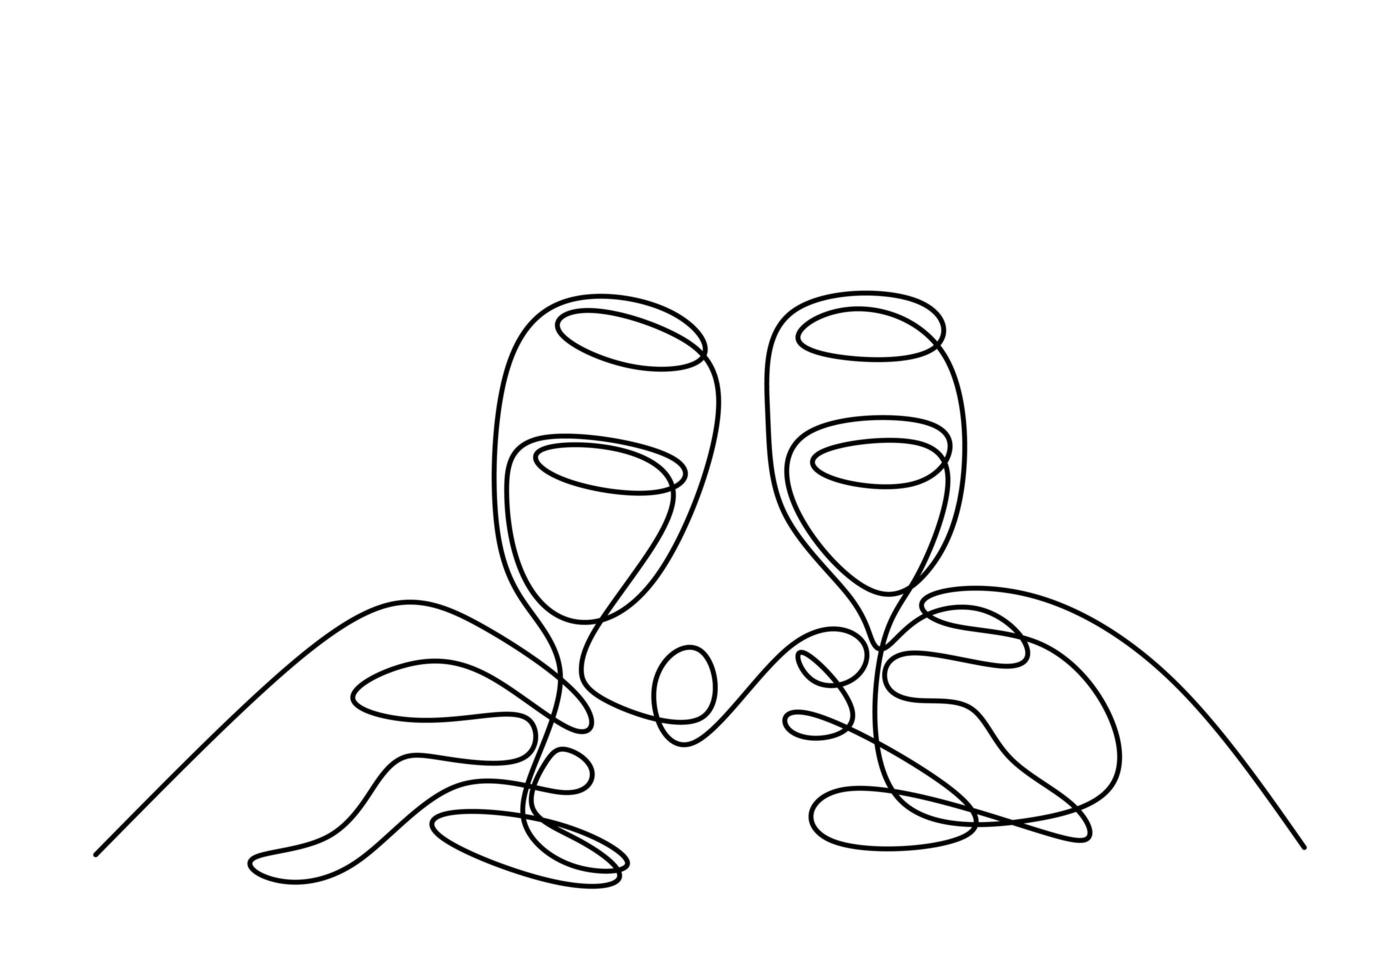 kontinuerlig en linje ritning. hejar med glas vin eller champagne. minimalism skiss handritad isolerad på vit bakgrund. enkelhet linje konst abstrakt stil. vektor